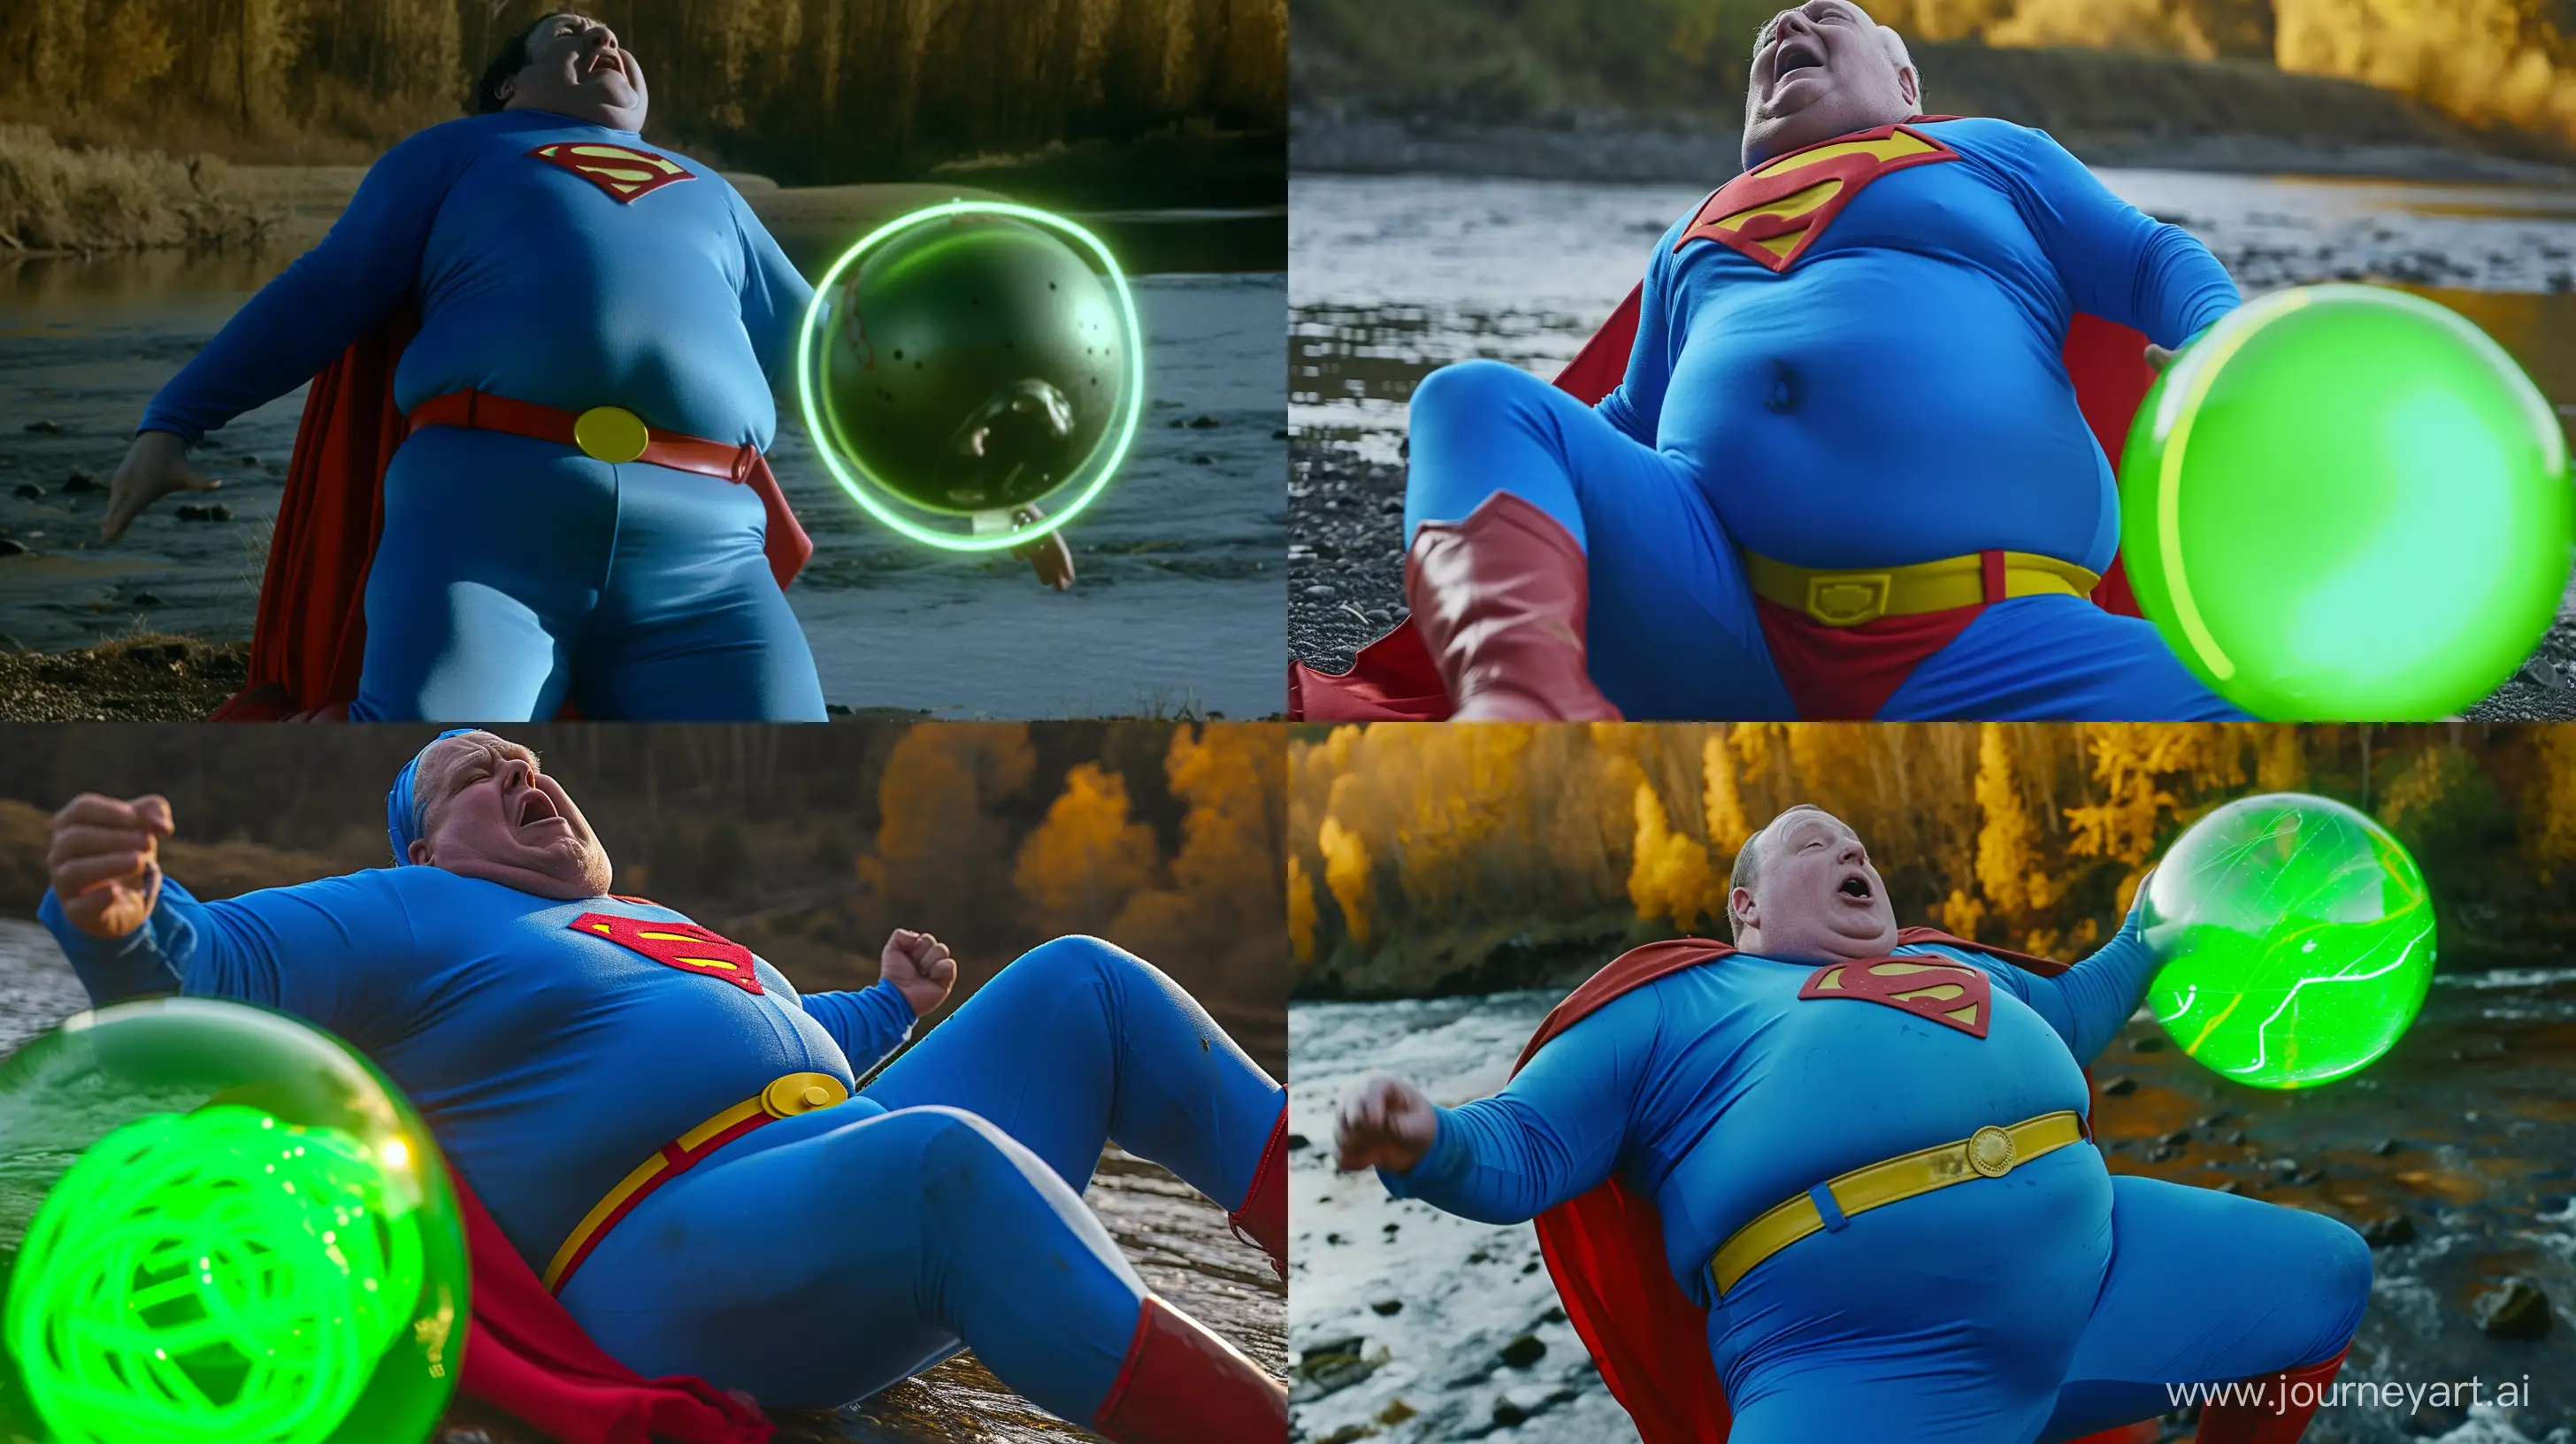 Startling-Superman-Fearful-60YearOld-in-1978-Costume-Falls-by-Glowing-Neon-Ball